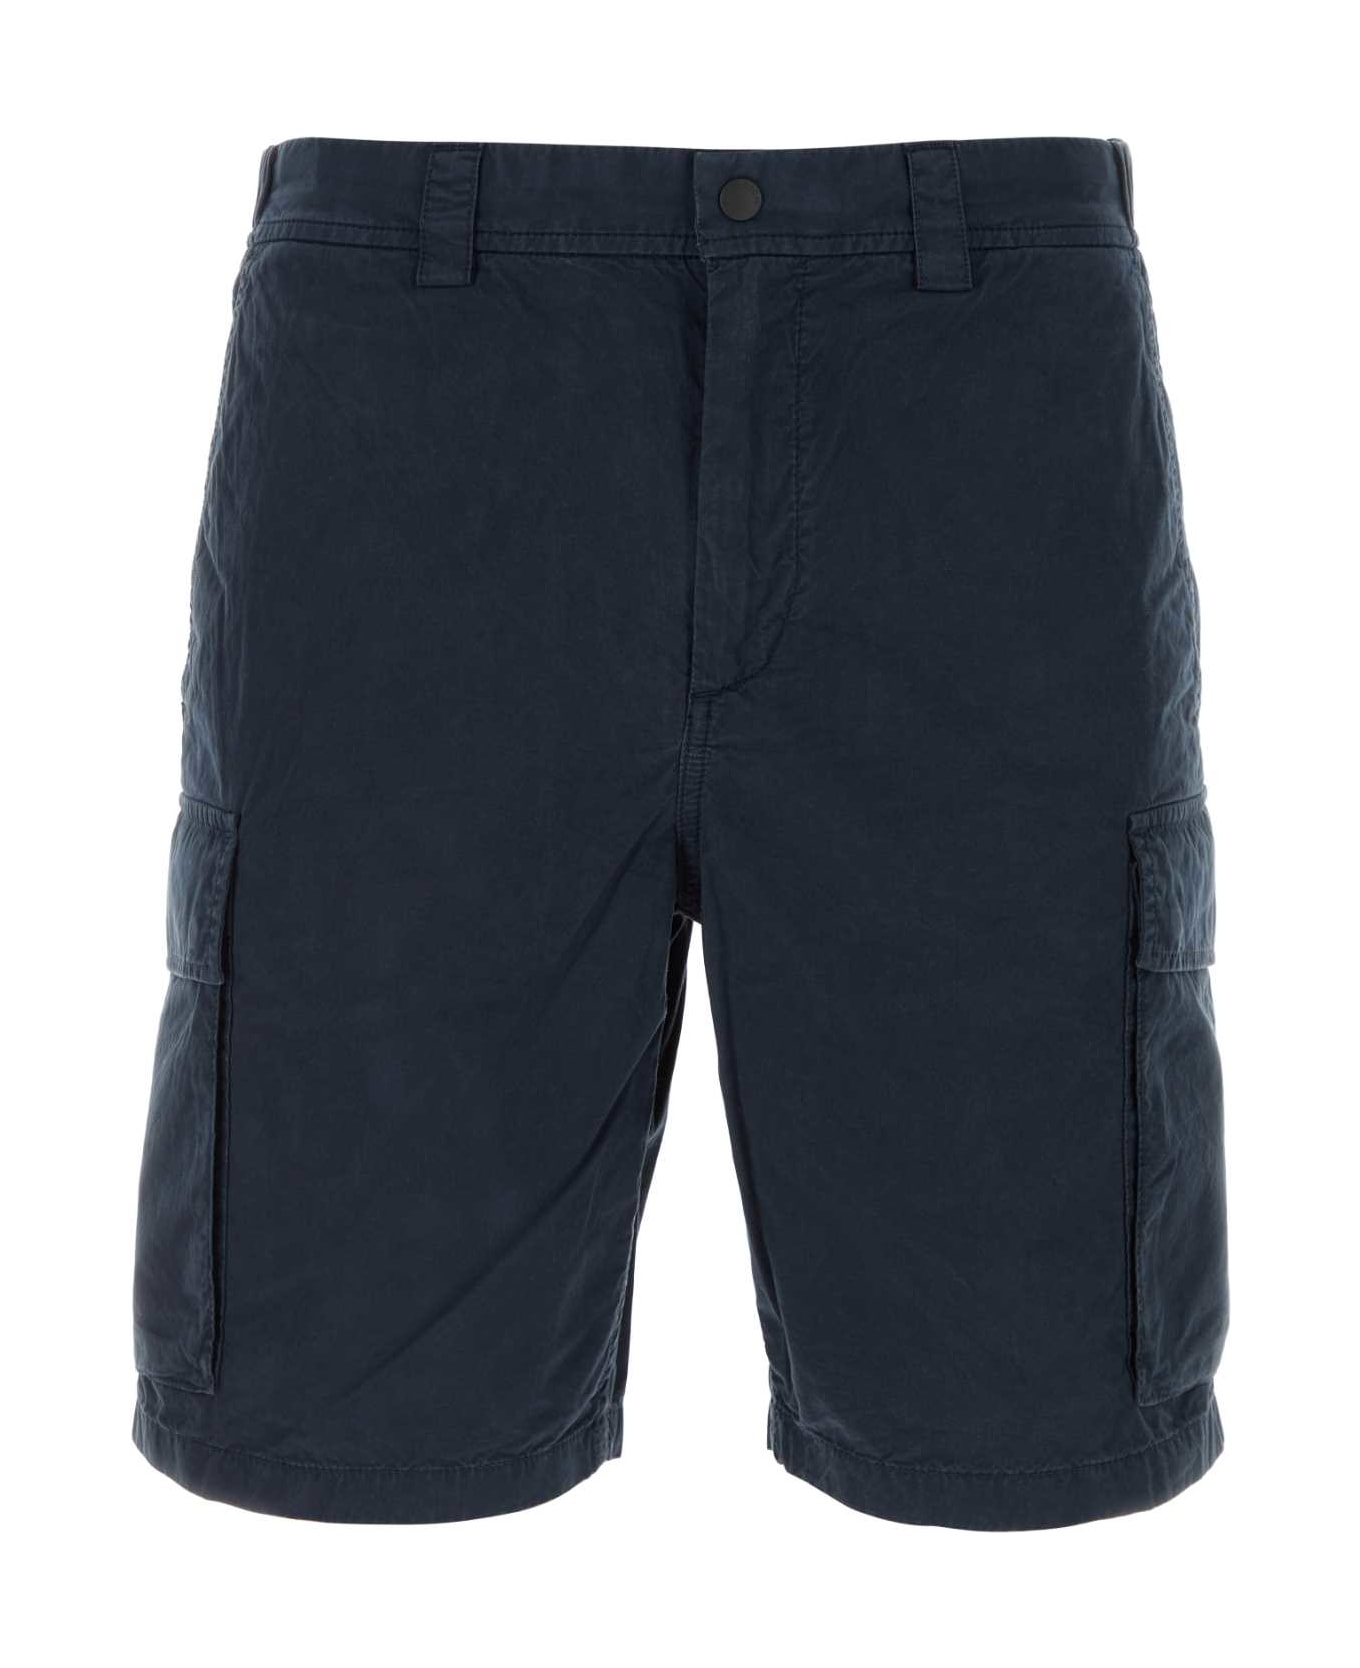 Woolrich Blue Cotton Bermuda Shorts - 3989